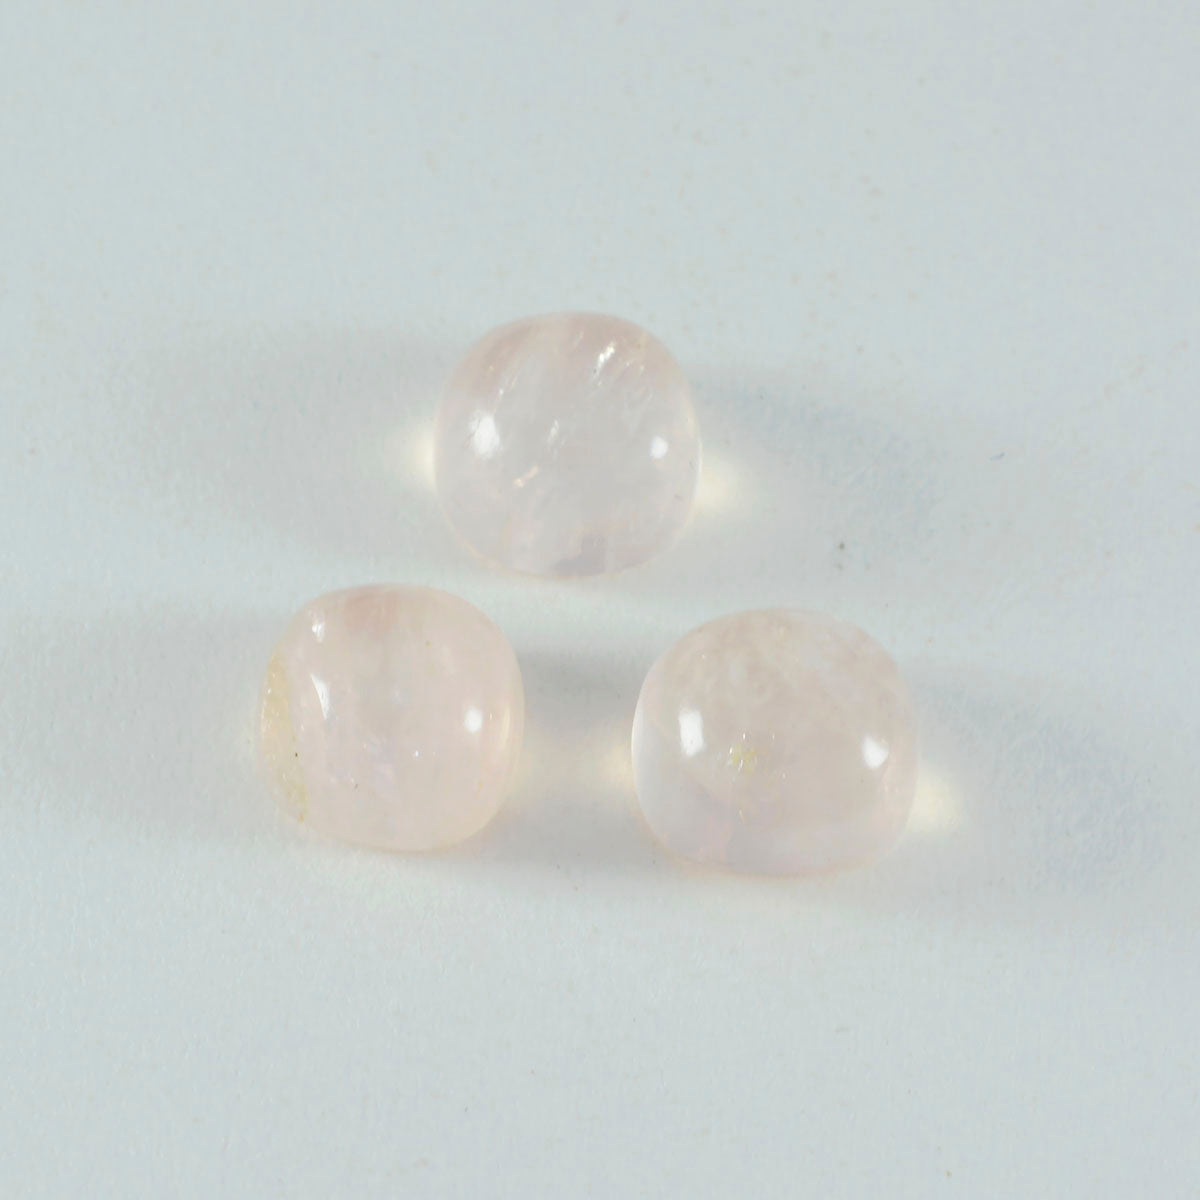 Riyogems 1PC Pink Rose Quartz Cabochon 5x5 mm Cushion Shape A+ Quality Gems